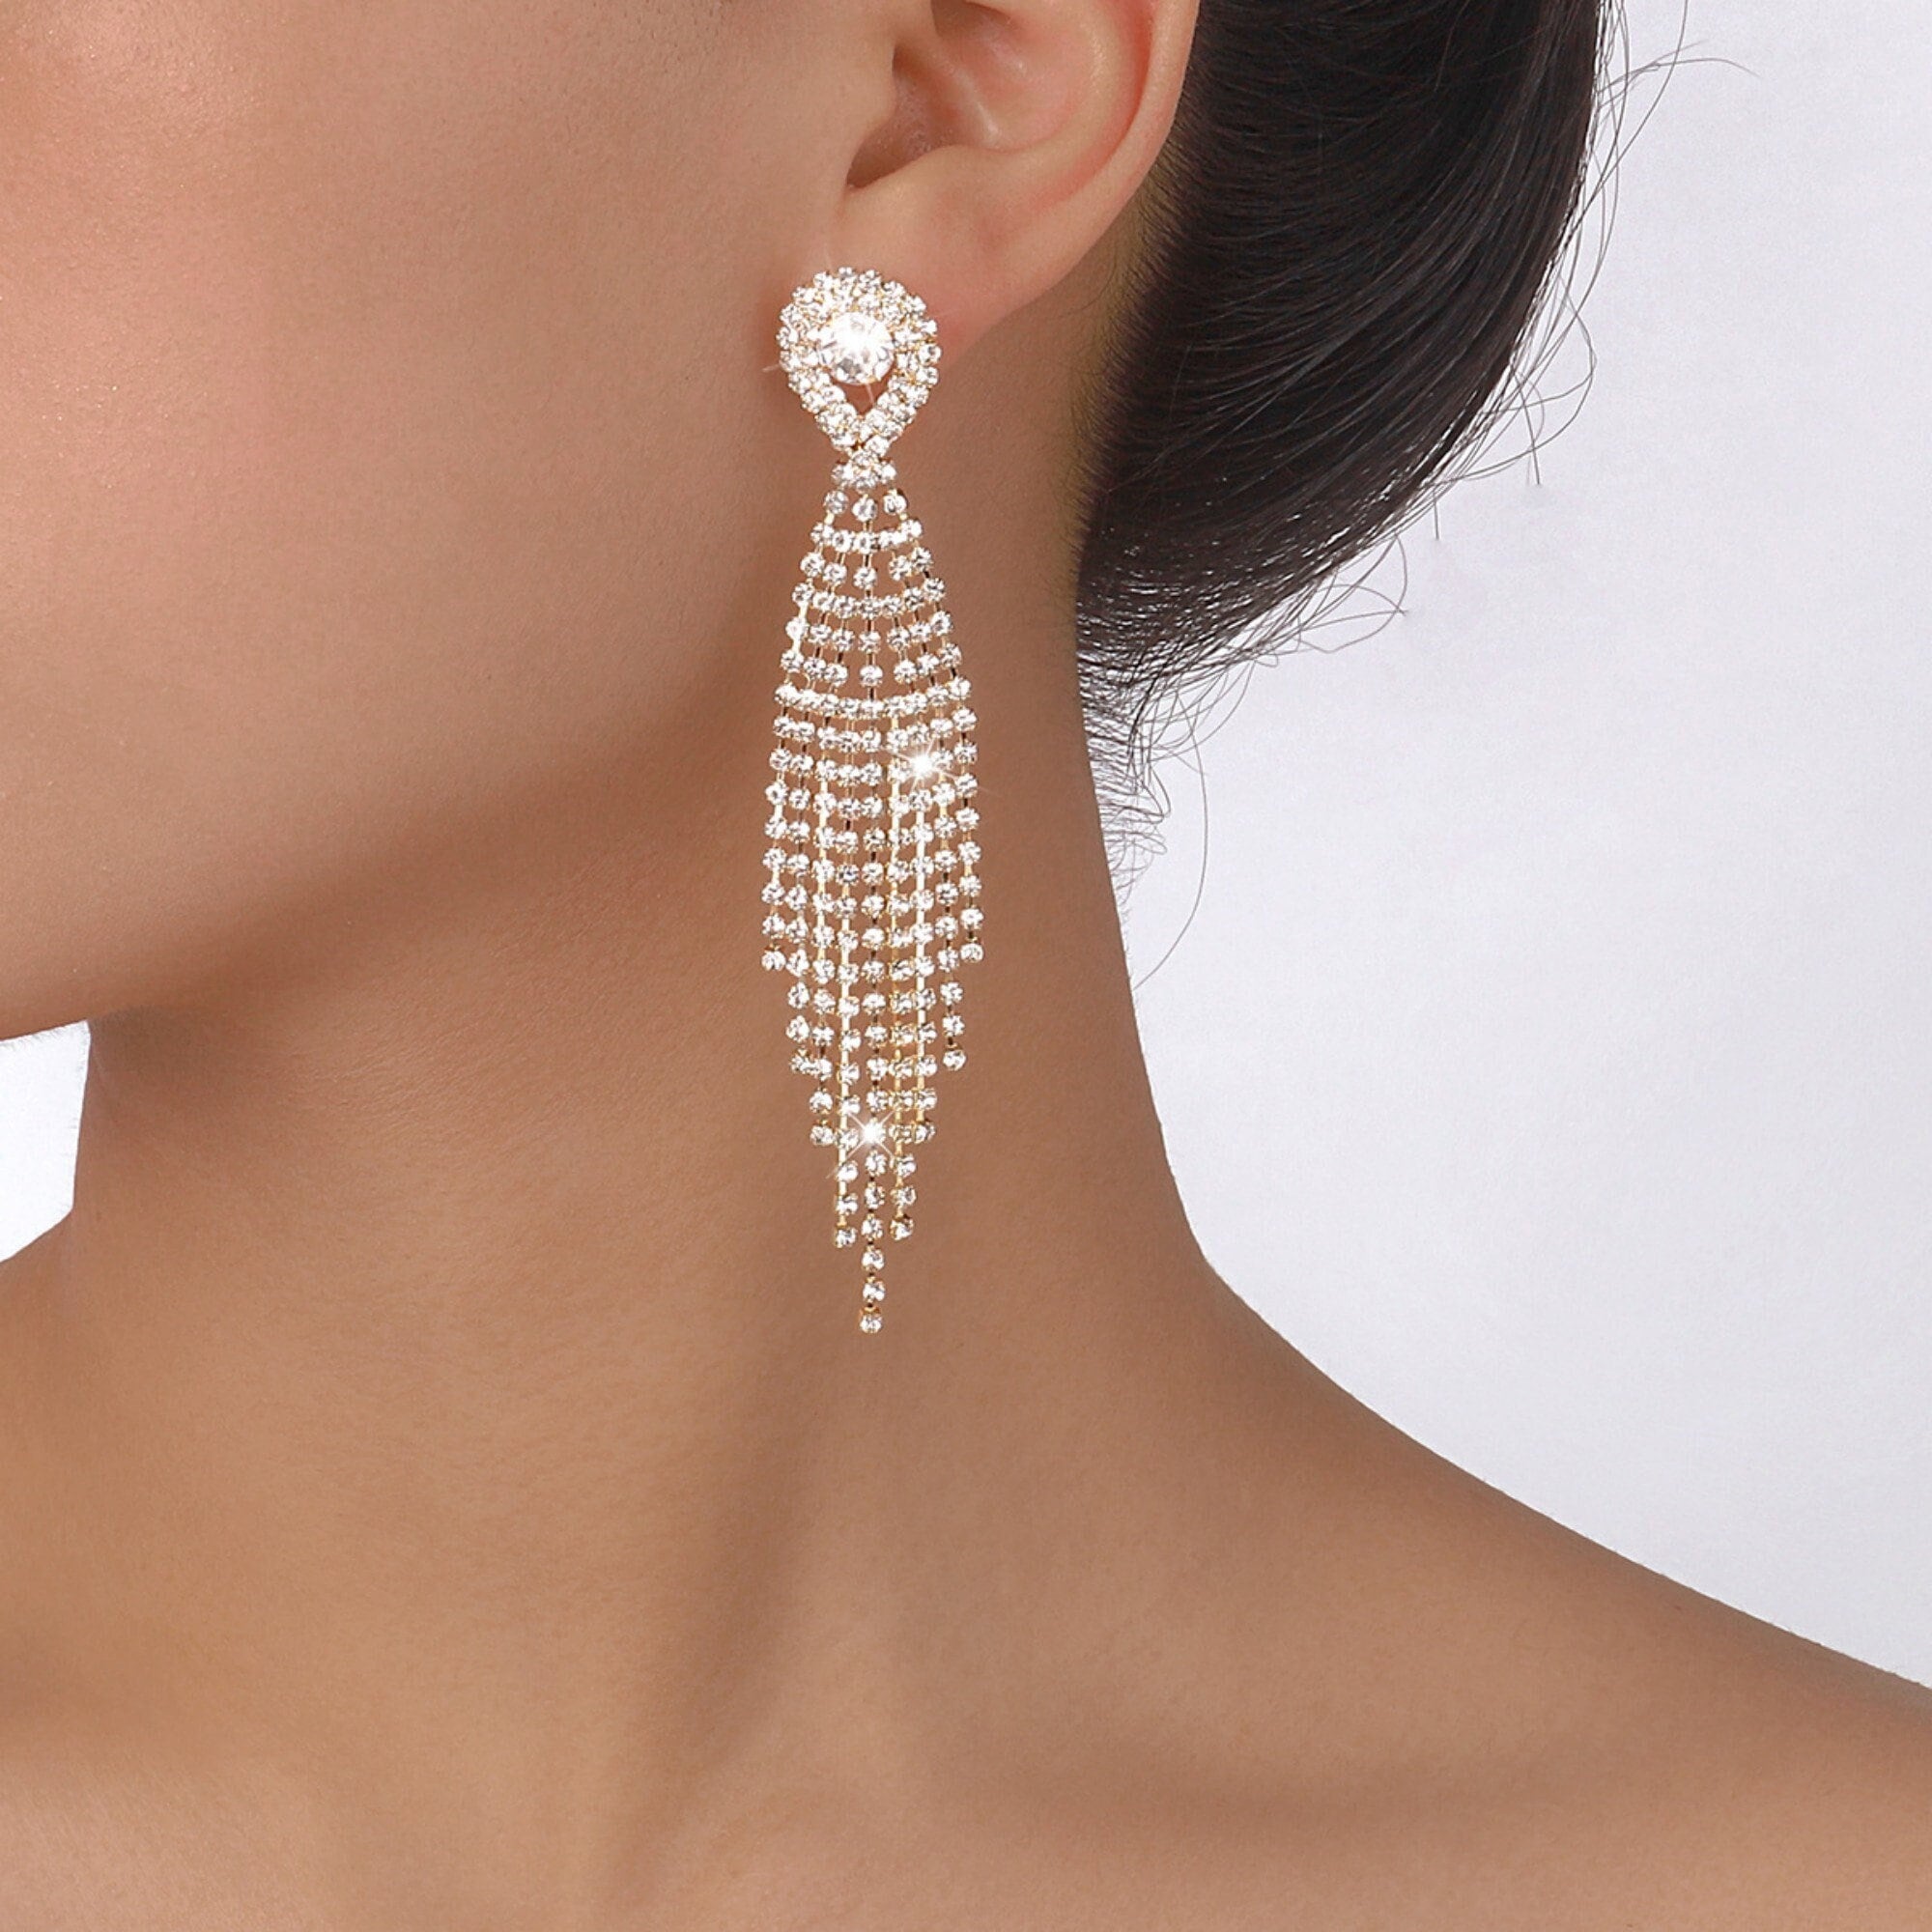 Wholesale Rhinestone Earrings by the Dozen | Bridal Jewelry | Prom Jewelry